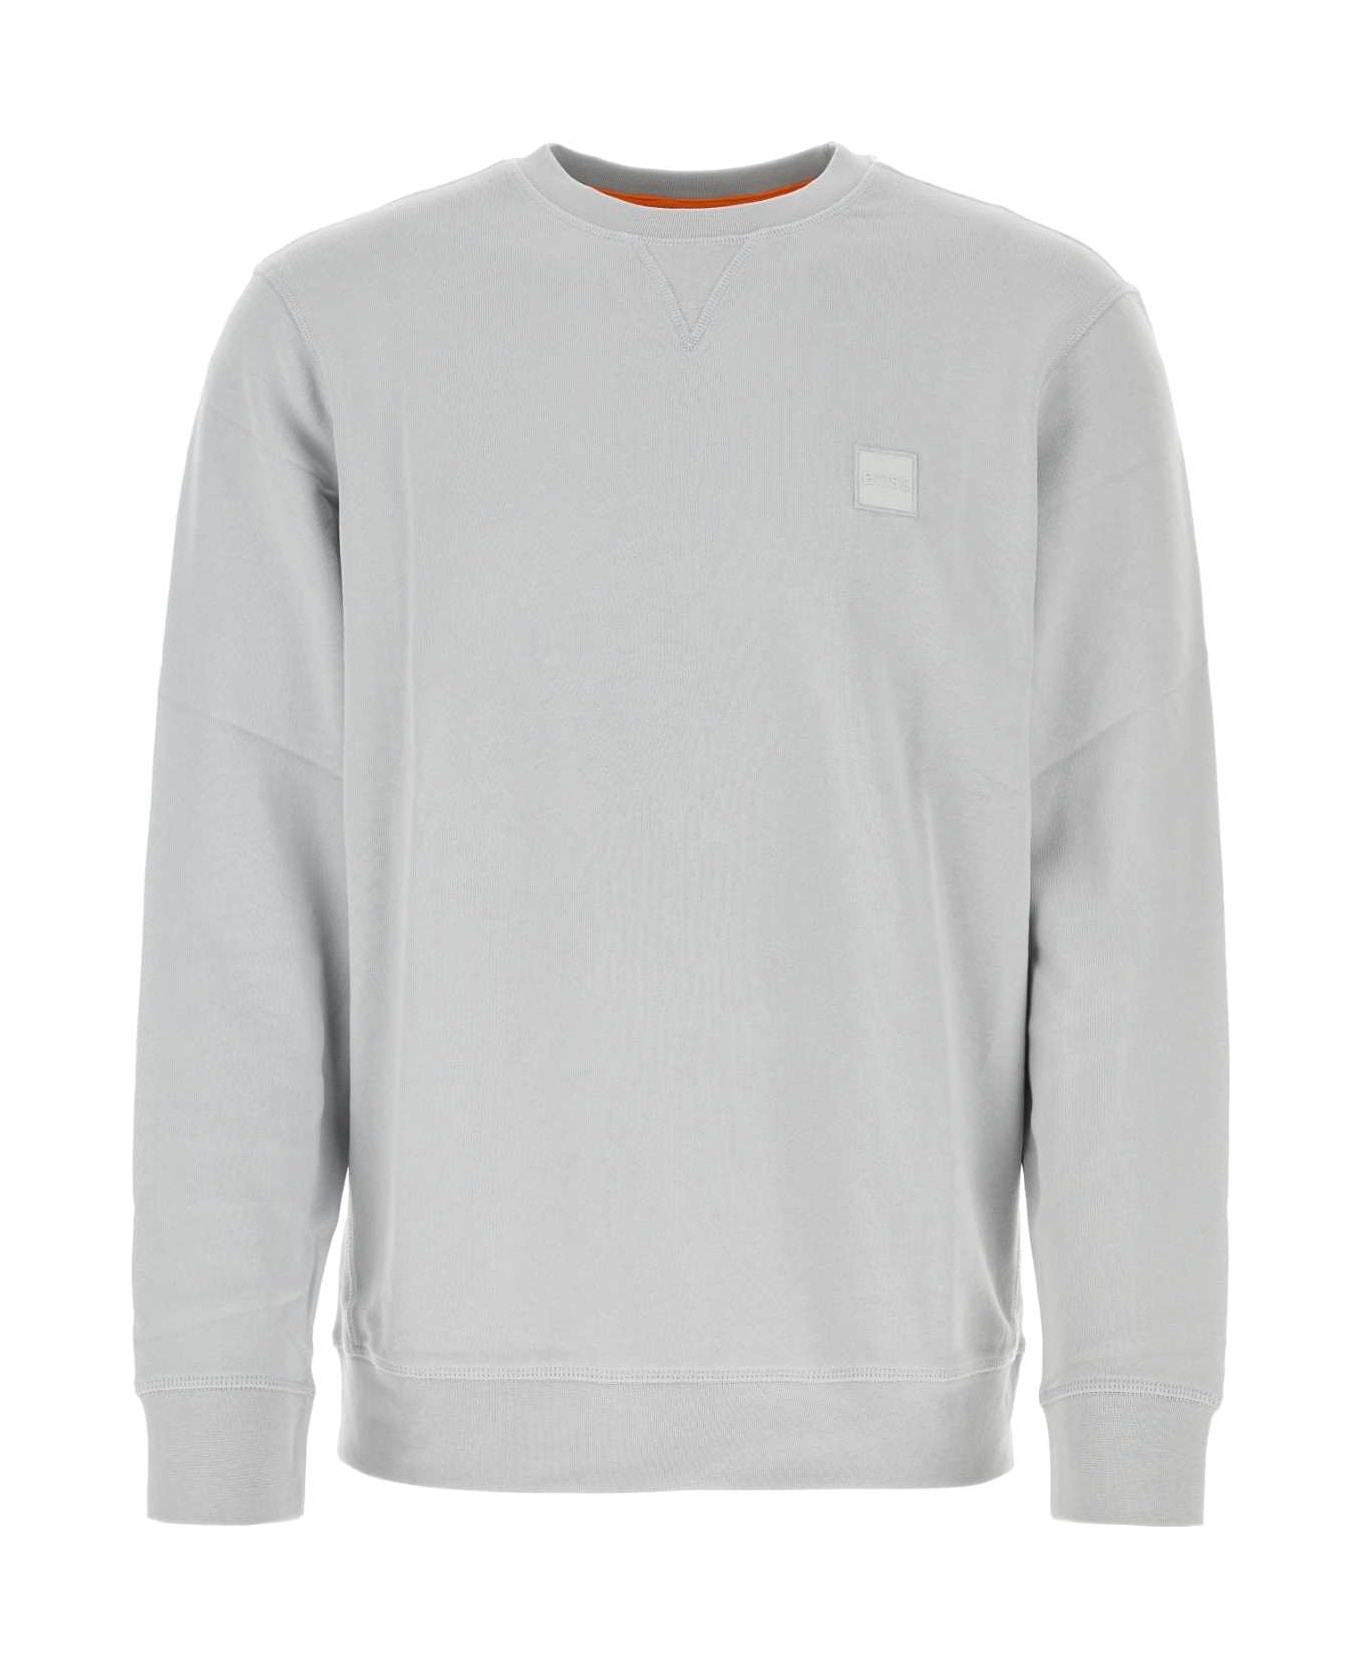 Hugo Boss Light Grey Cotton Sweatshirt - LIGHTPASTELGREY フリース